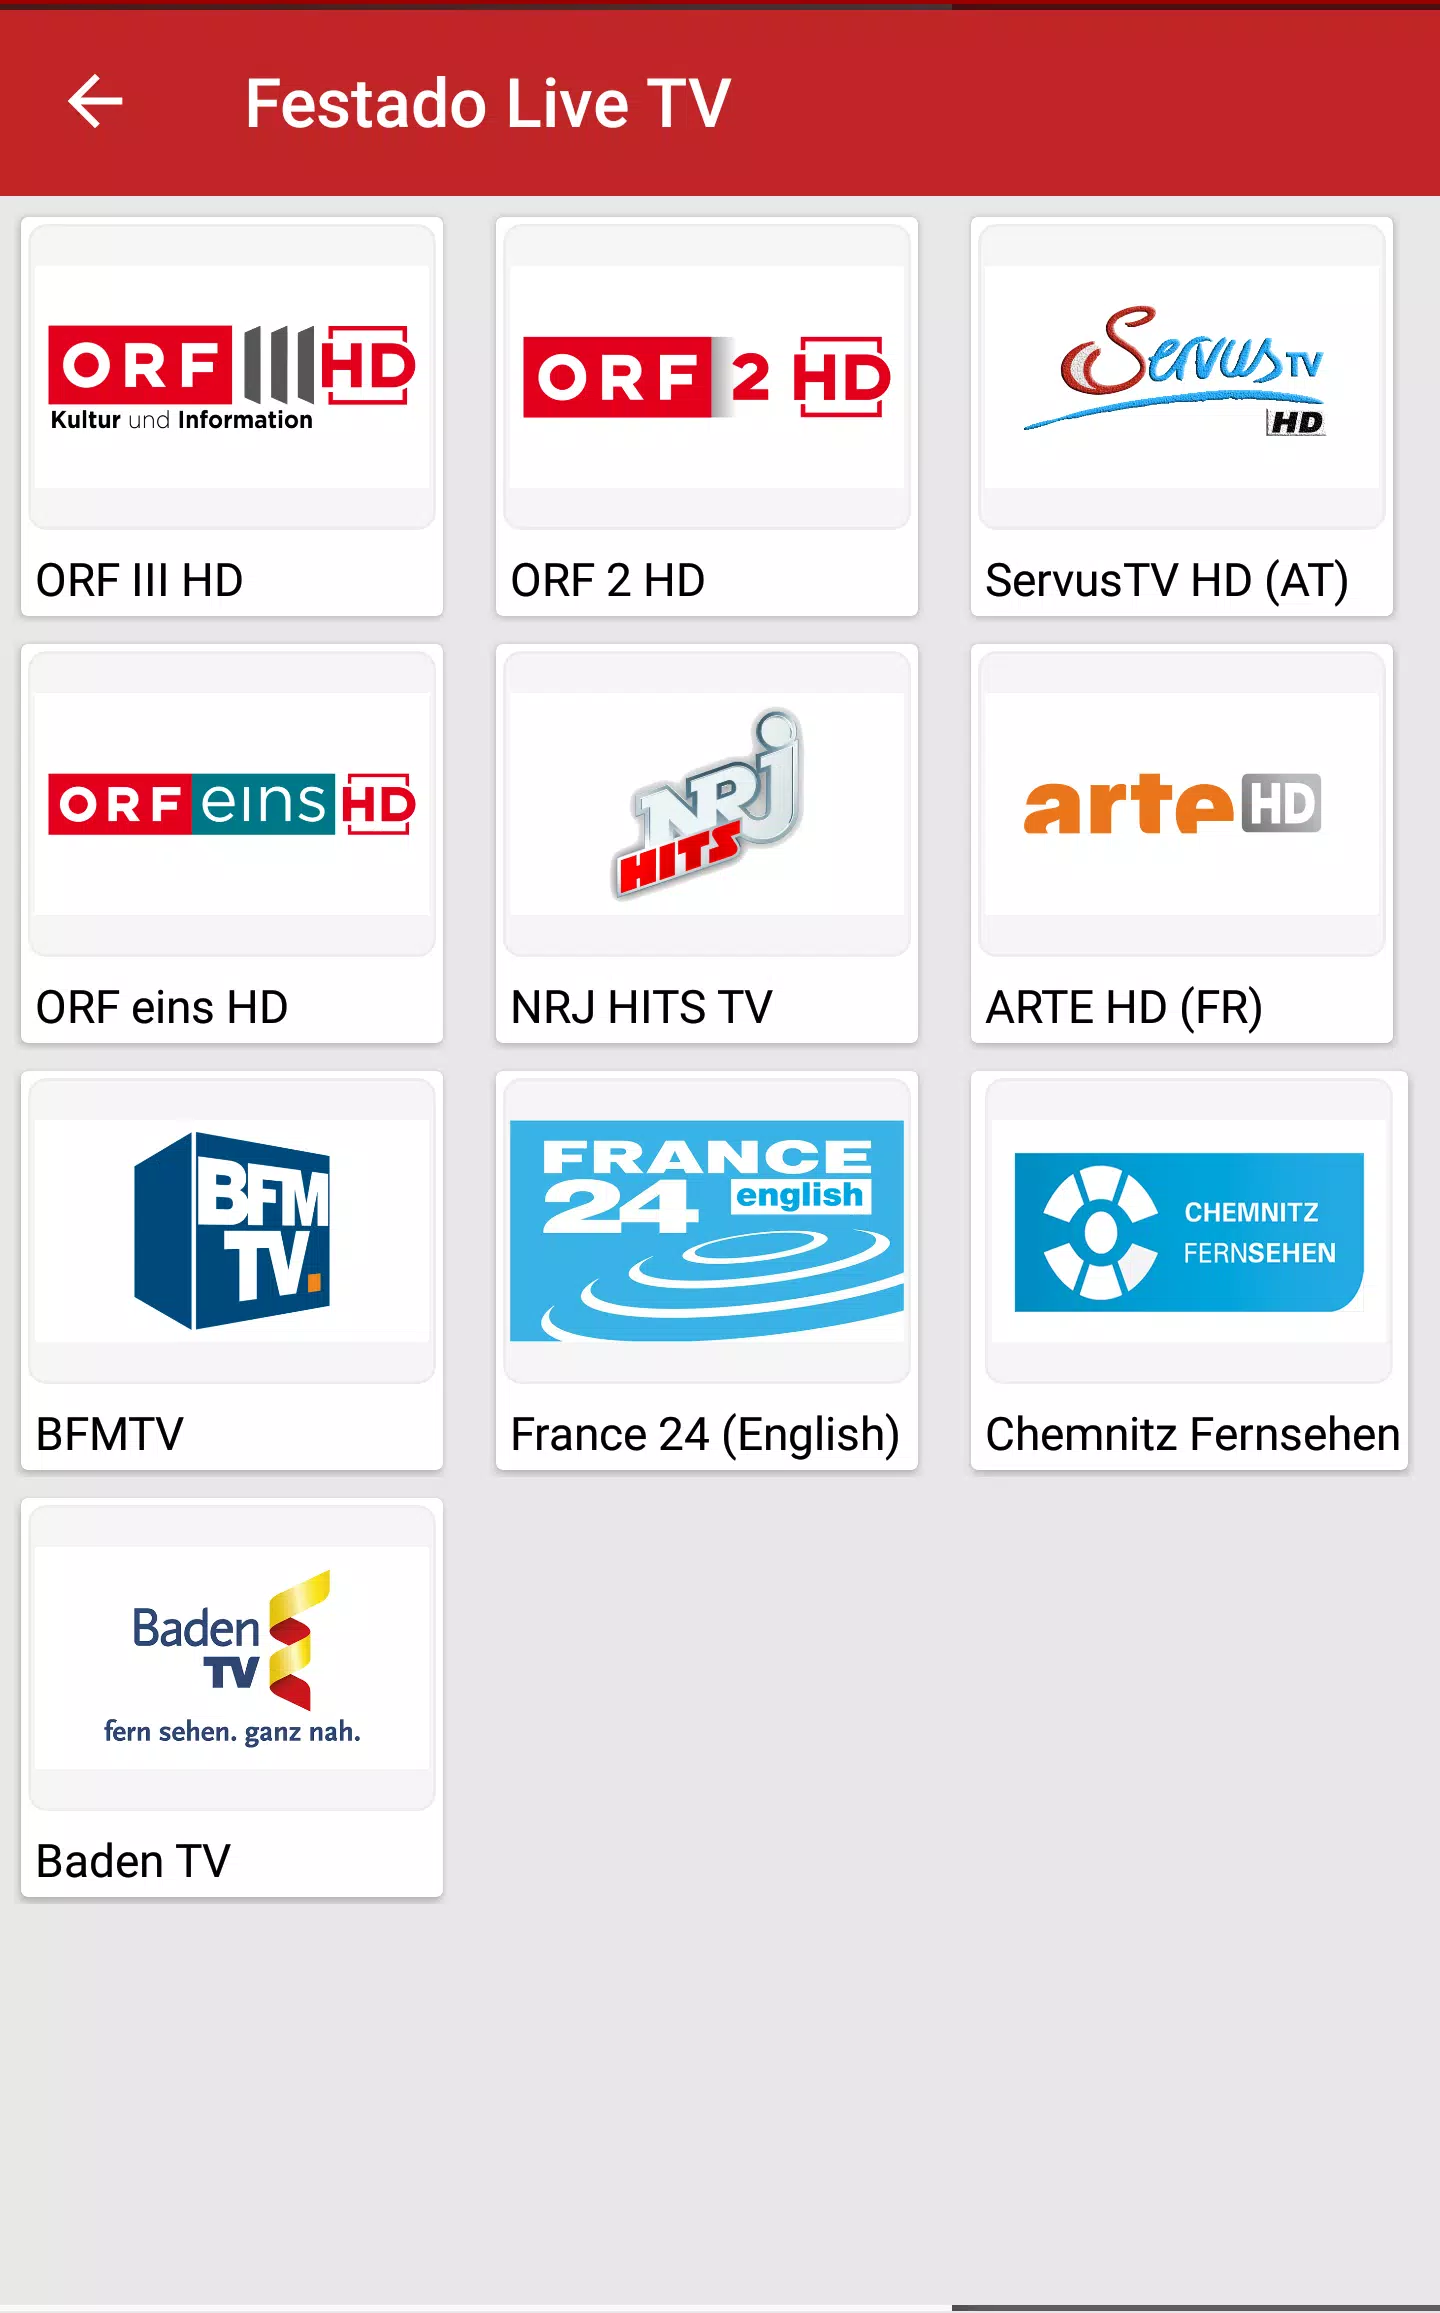 FESTADO LIVE TV APK for Android Download